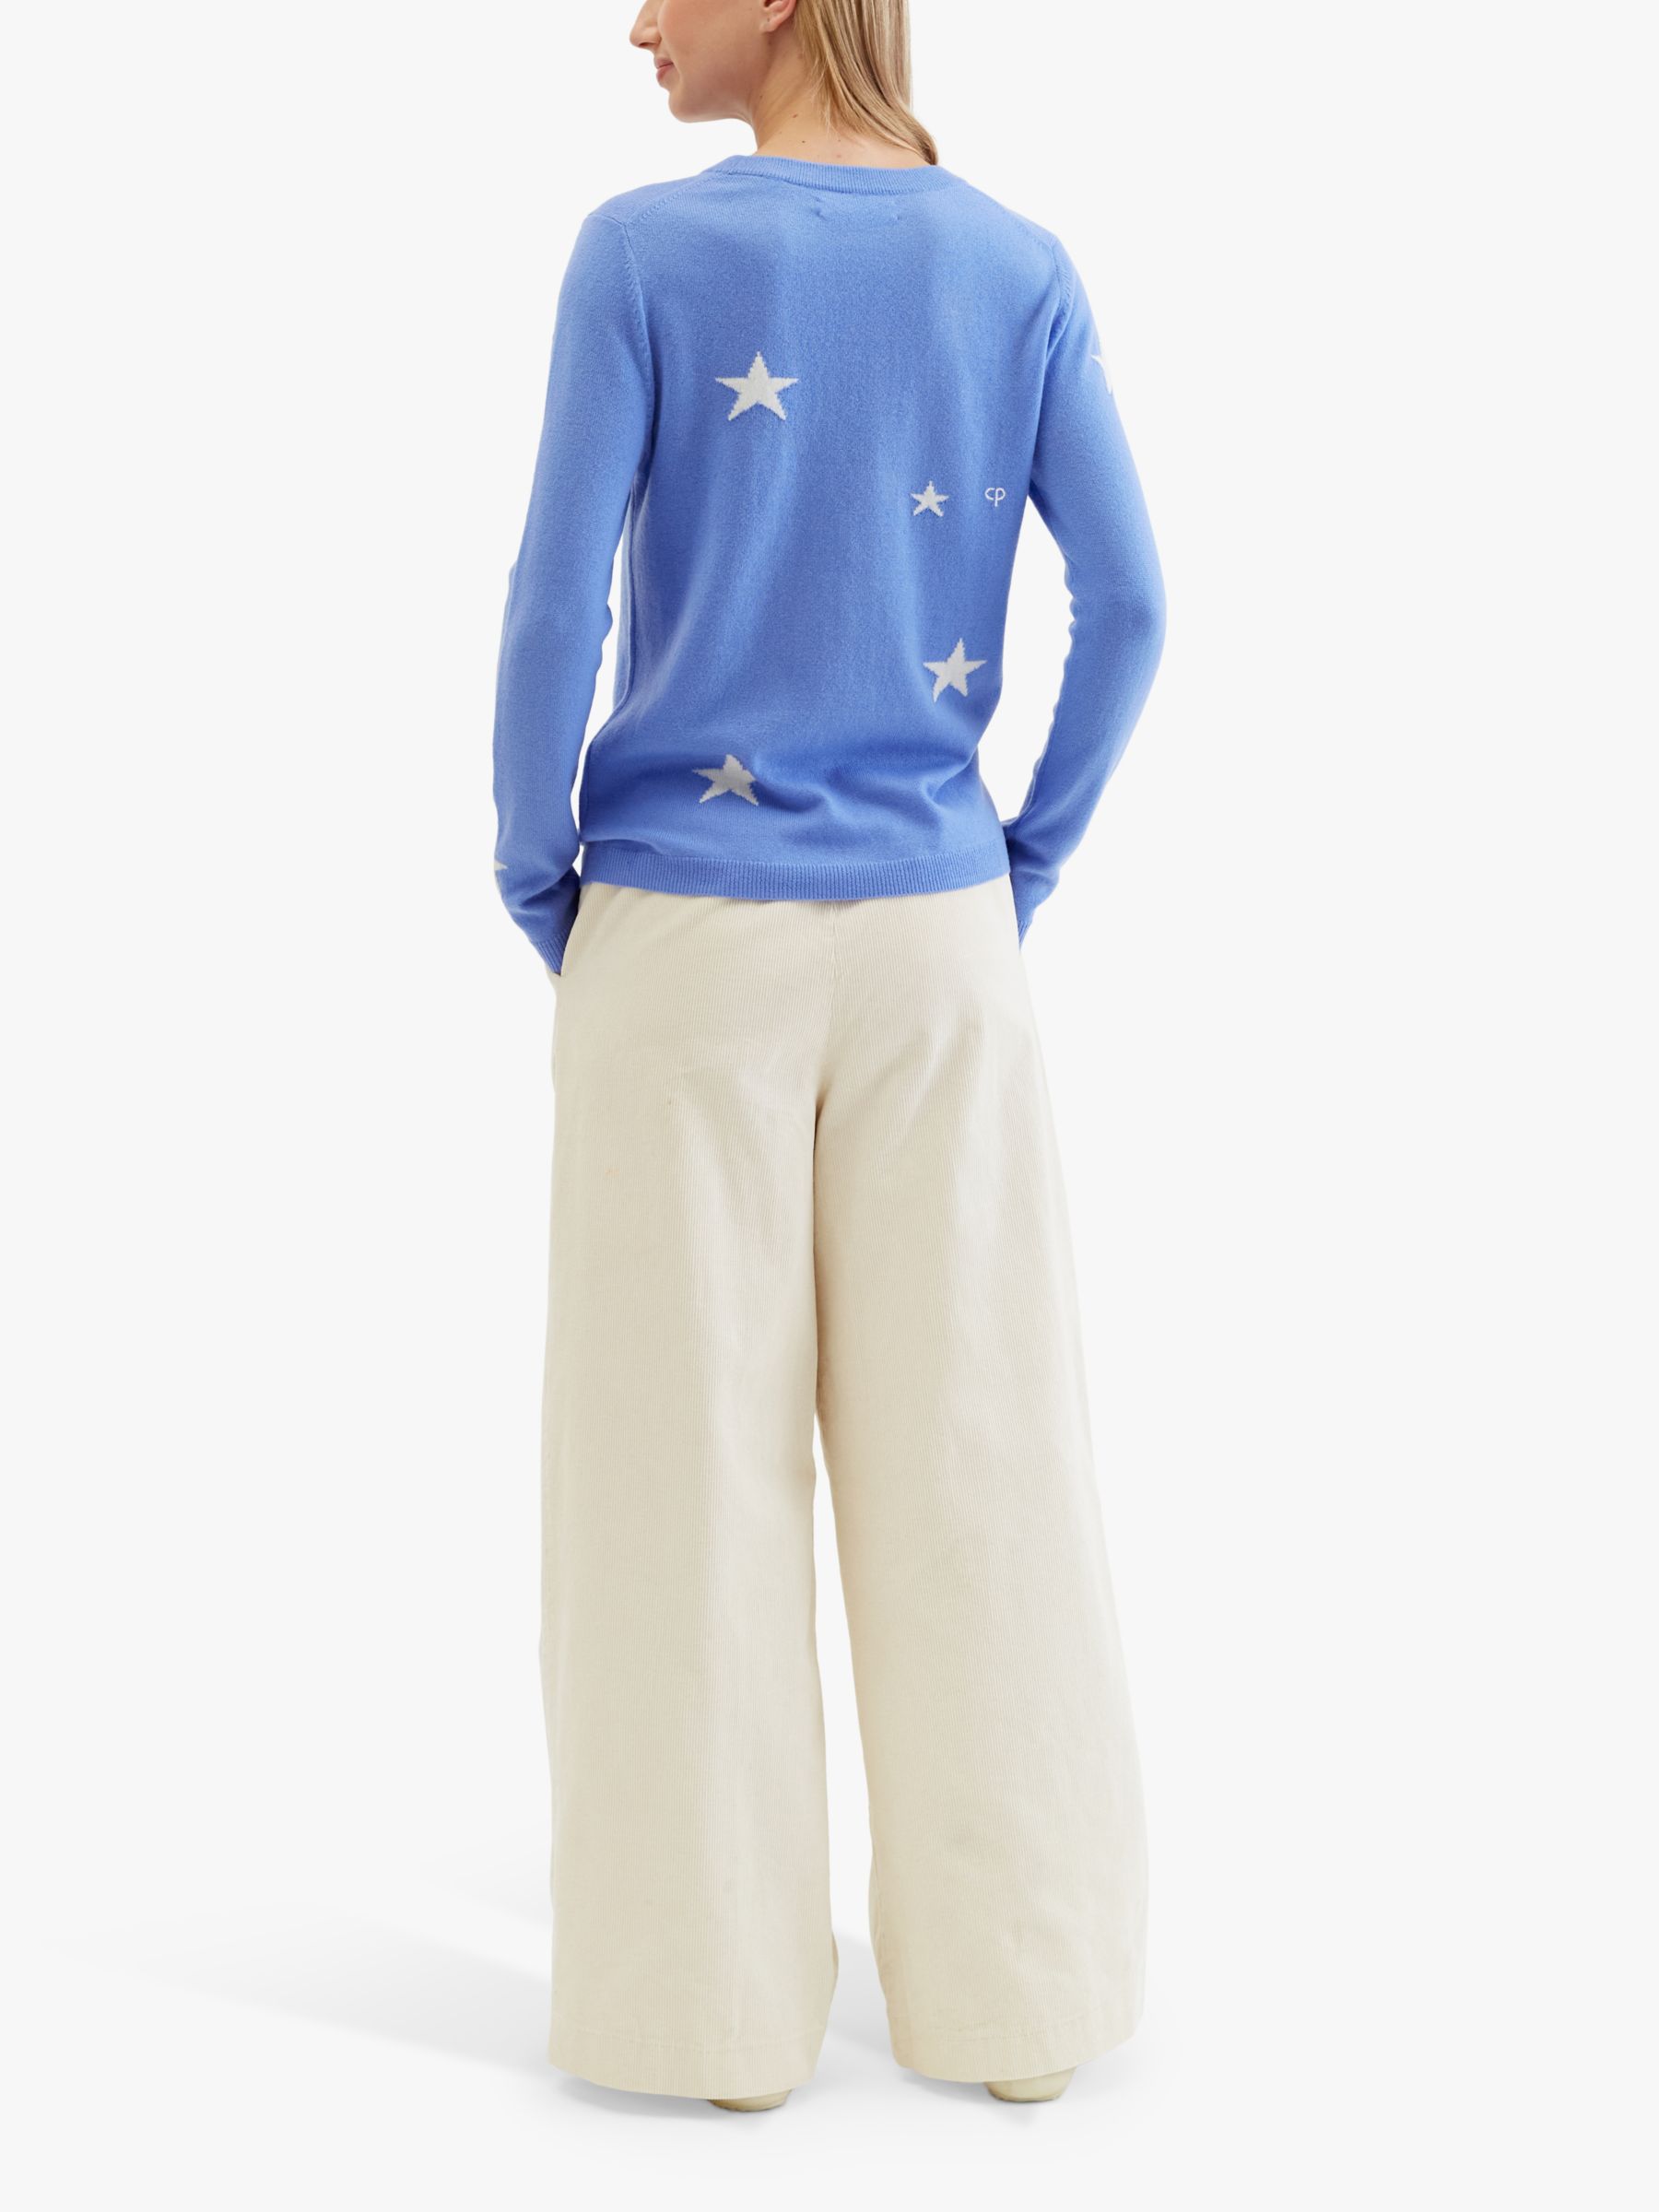 Chinti & Parker Wool Cashmere Blend Star Jumper, Powder Blue/Cream, XS